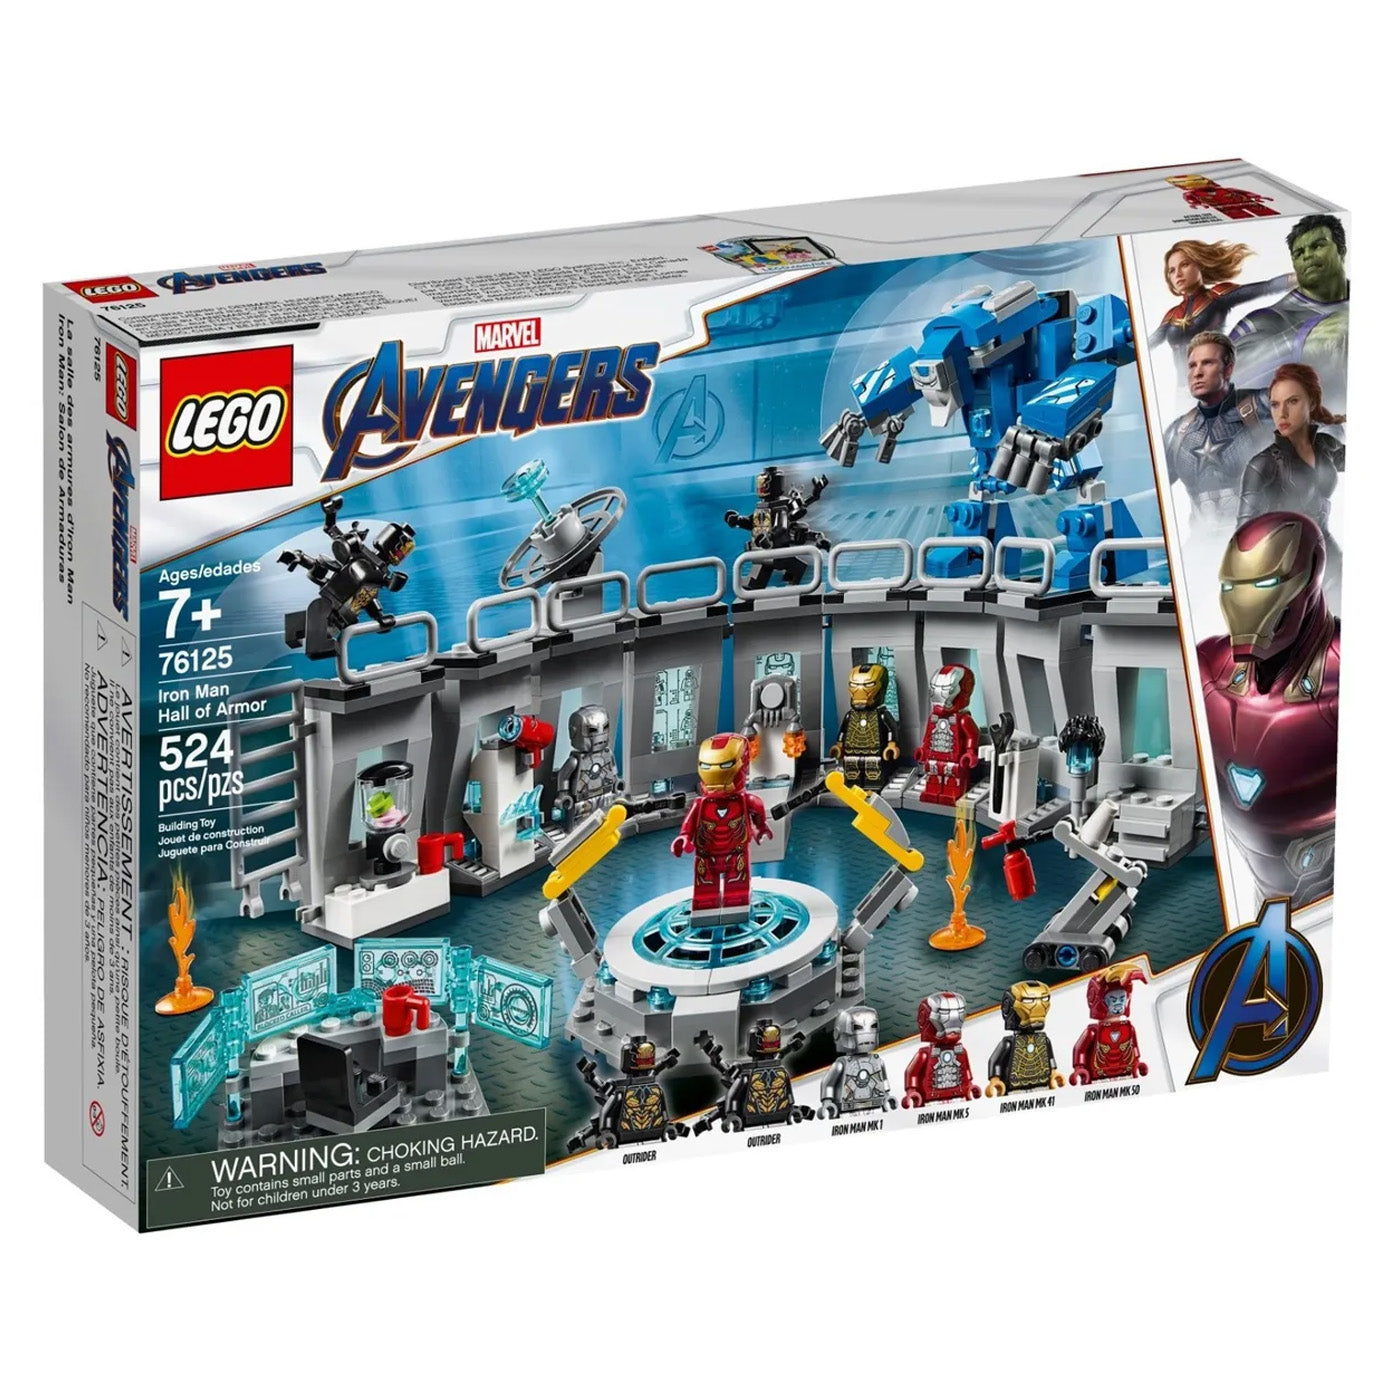 LEGO Marvel Avengers: Iron Man Hall of Armor Set 76125